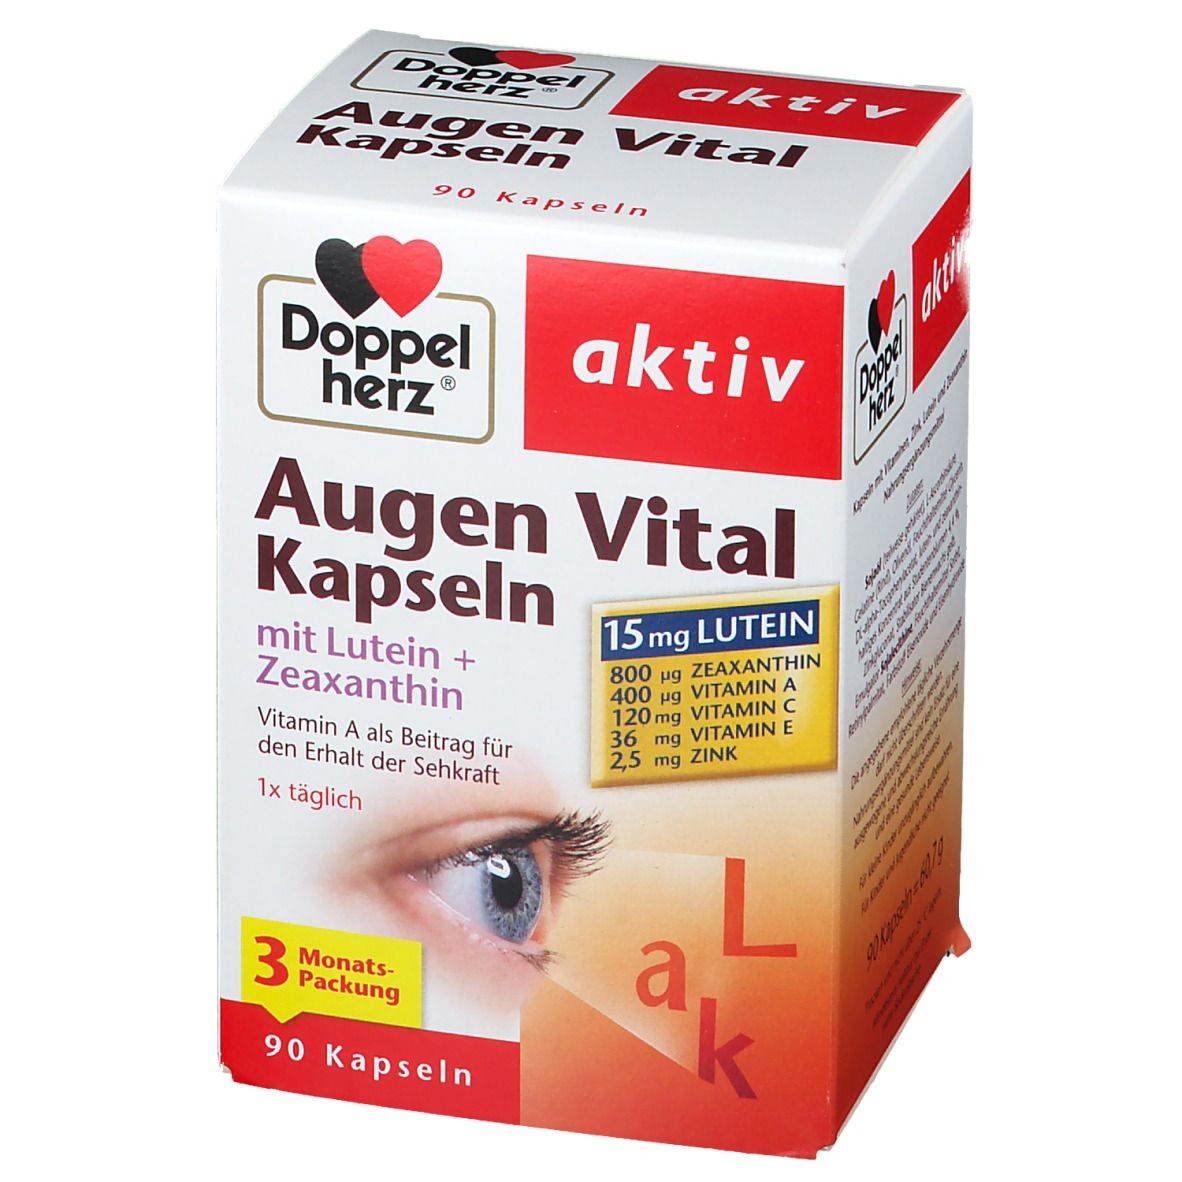 Doppelherz Augen Vital Kapseln mit Lutein Zeaxanthin/ 3-Monats-Packung/ Nahrun 